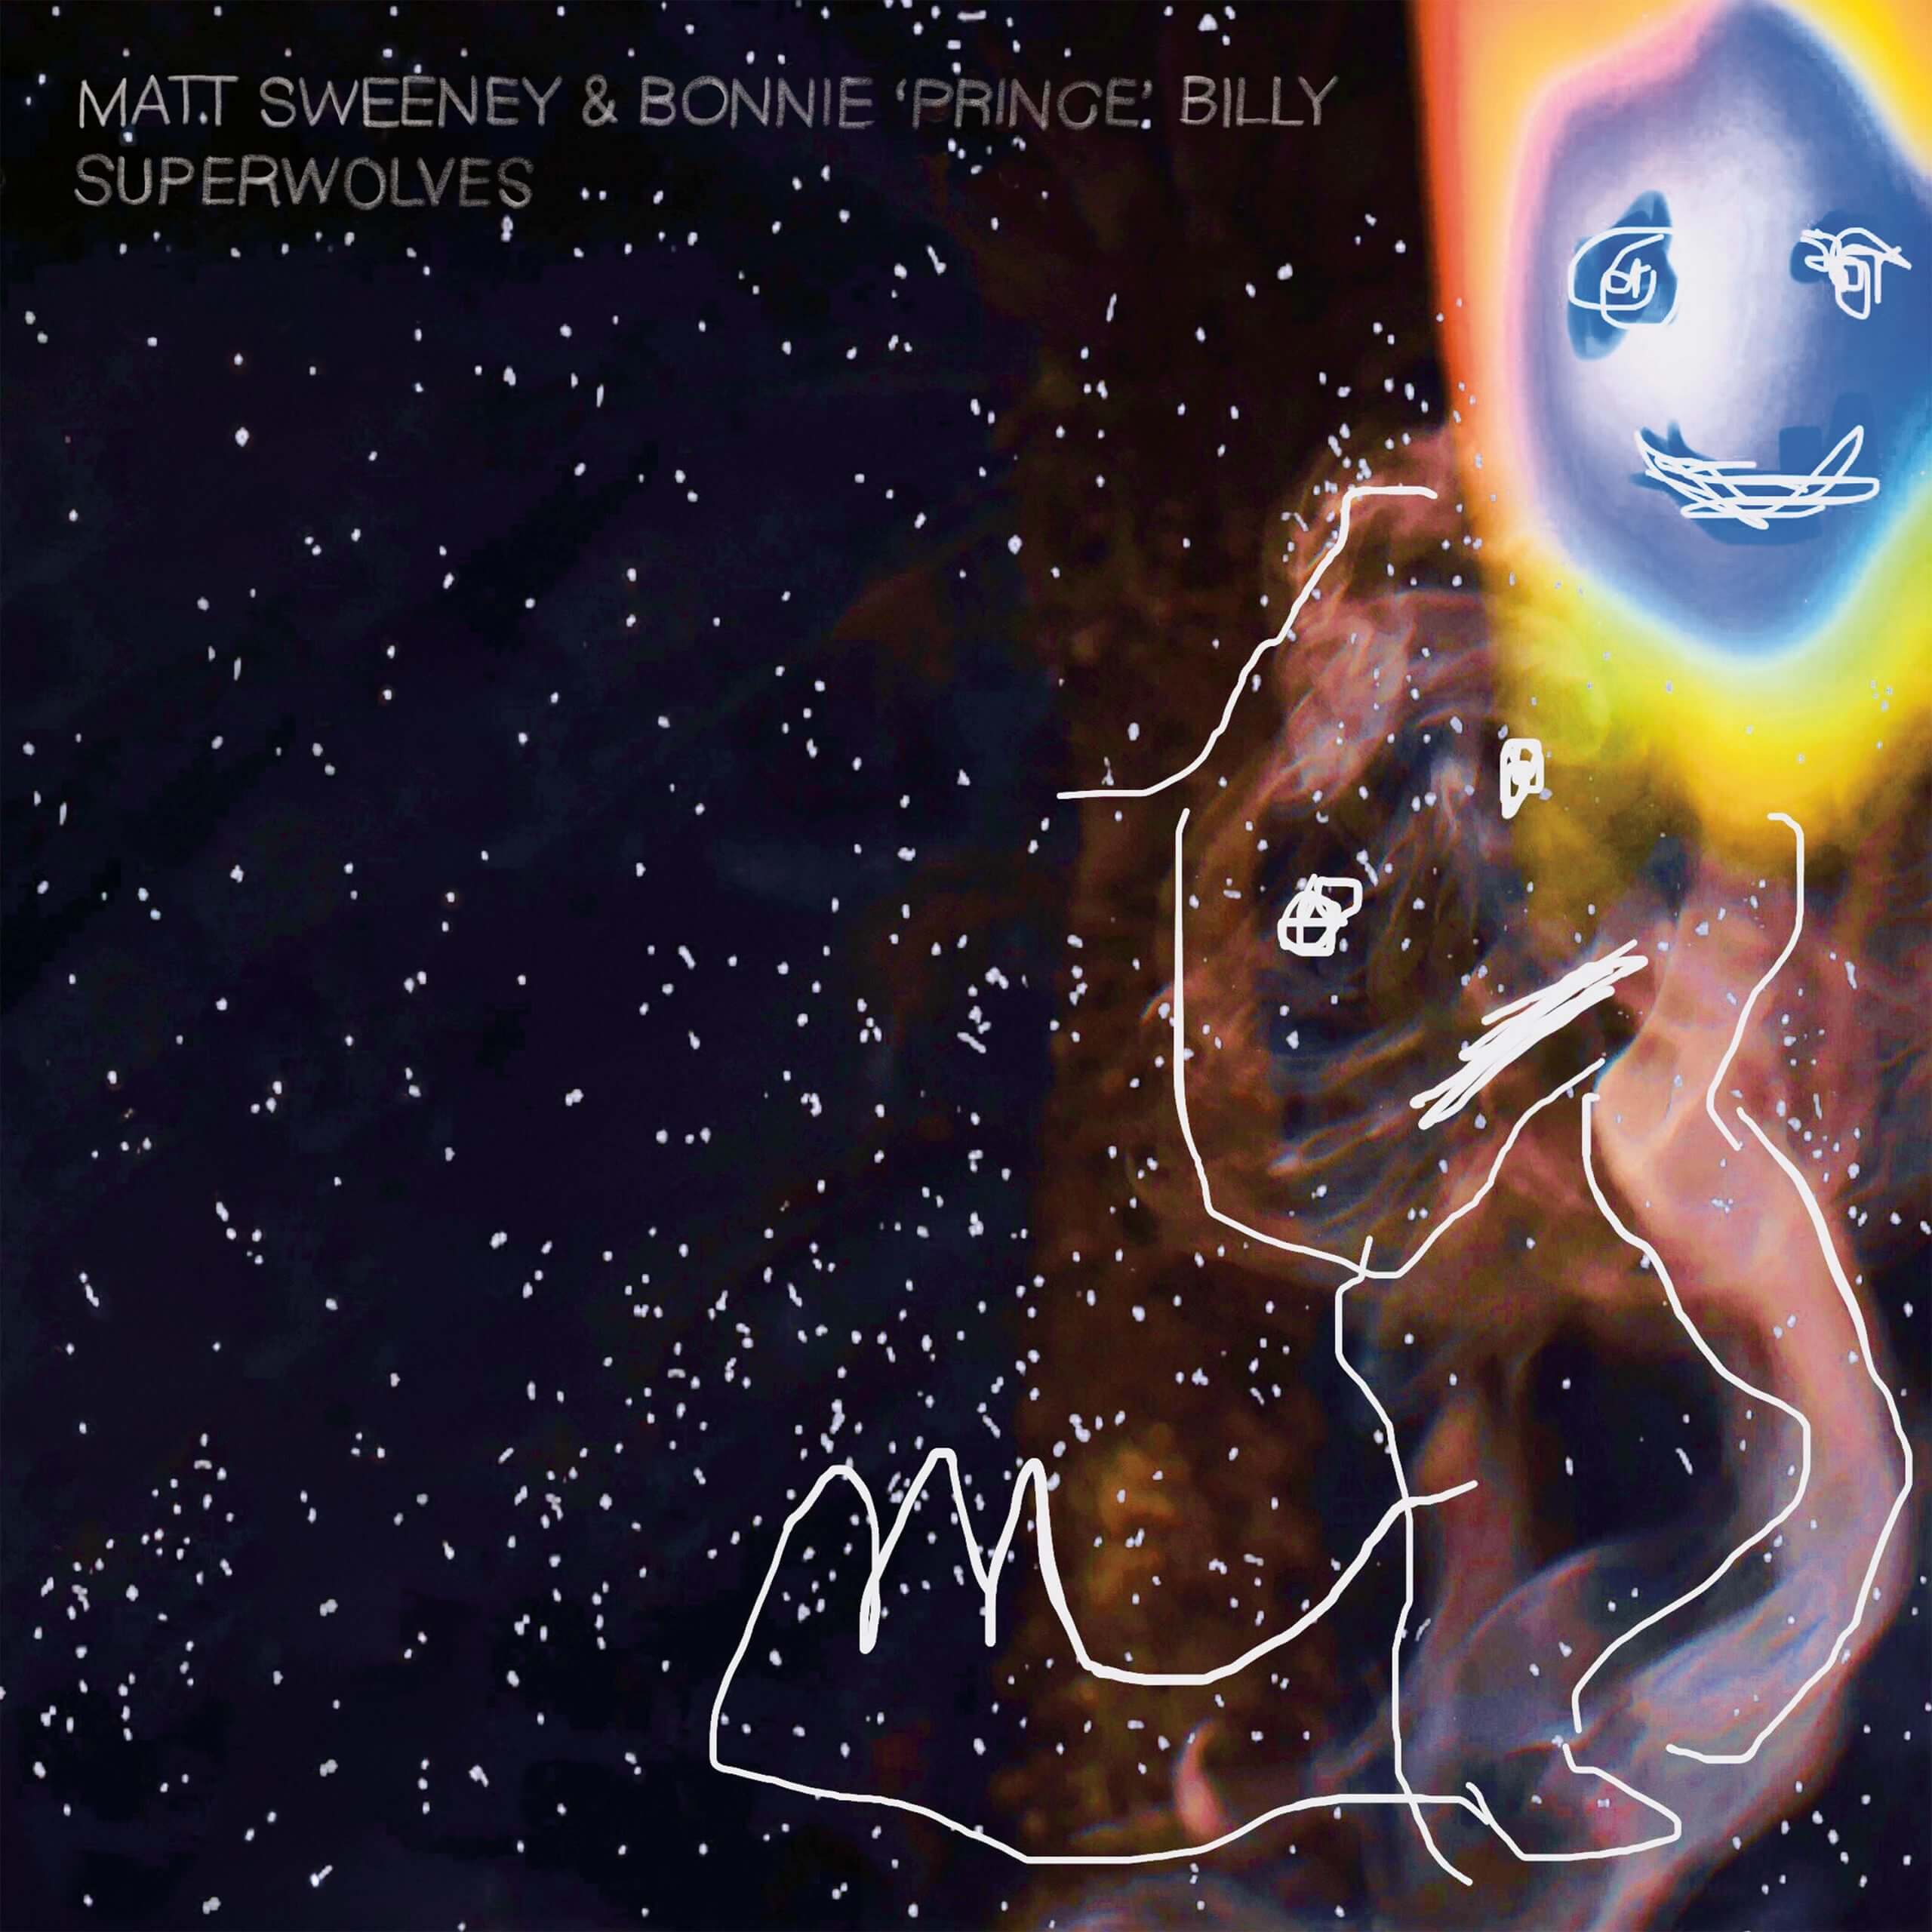 Matt Sweeney & Bonnie ‘Prince’ Billy – My Blue Suit